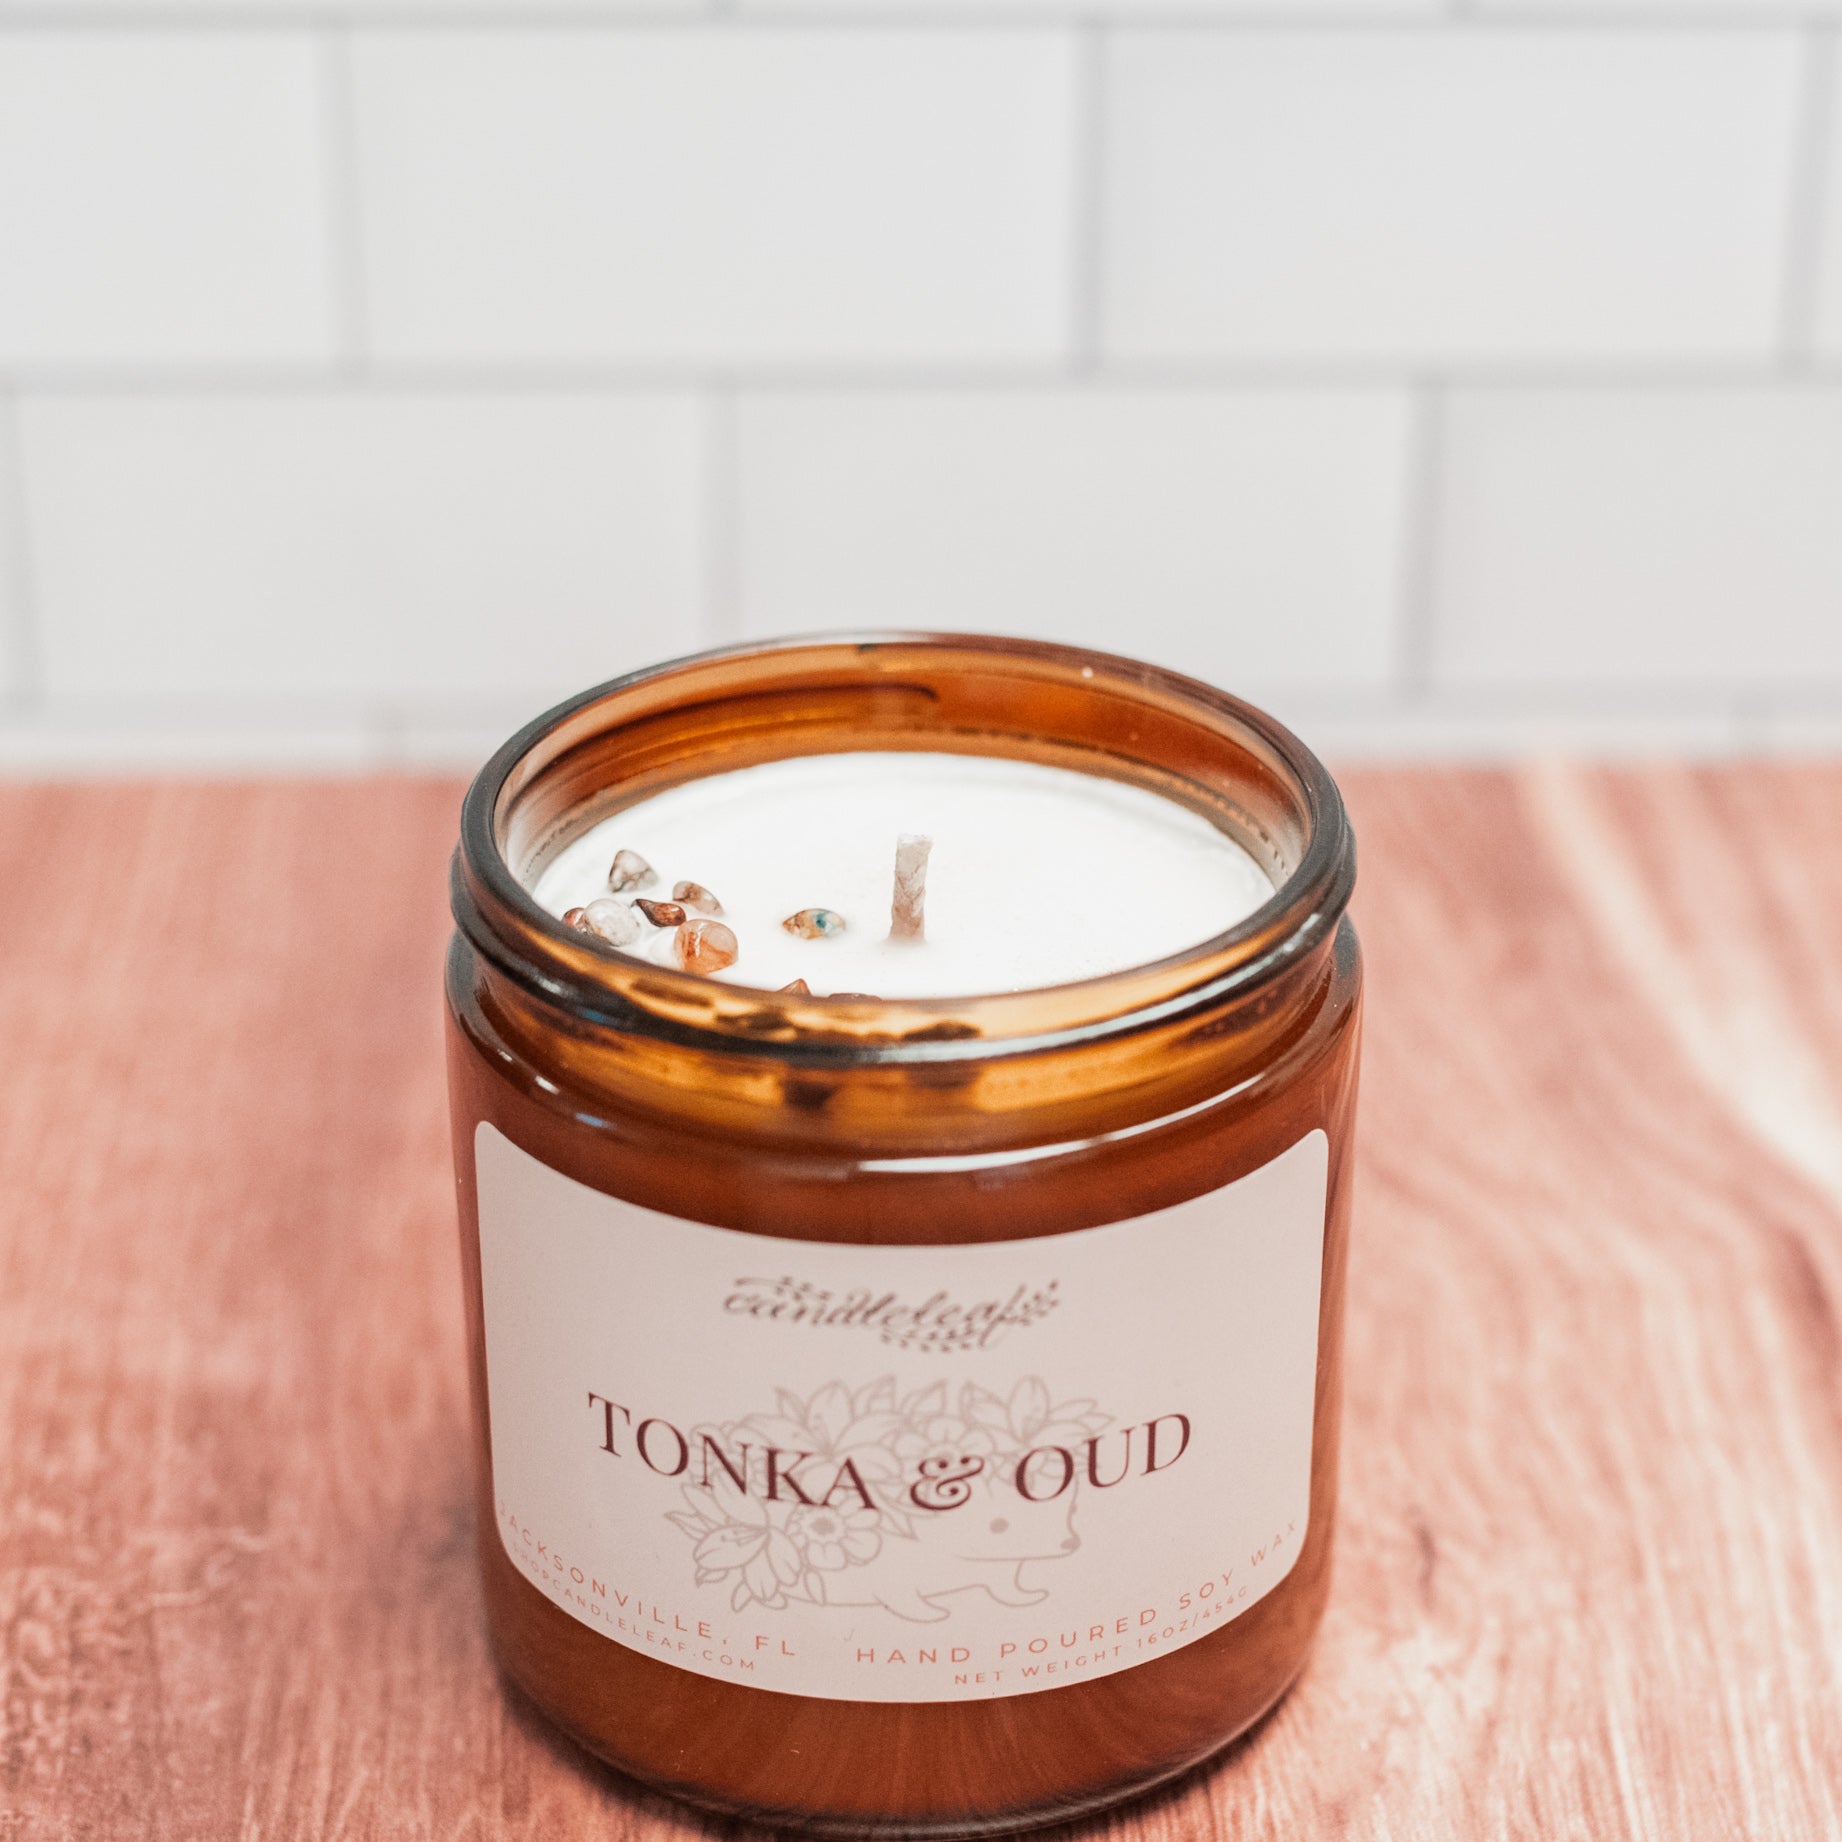 Tonka and Oud Amber Jar